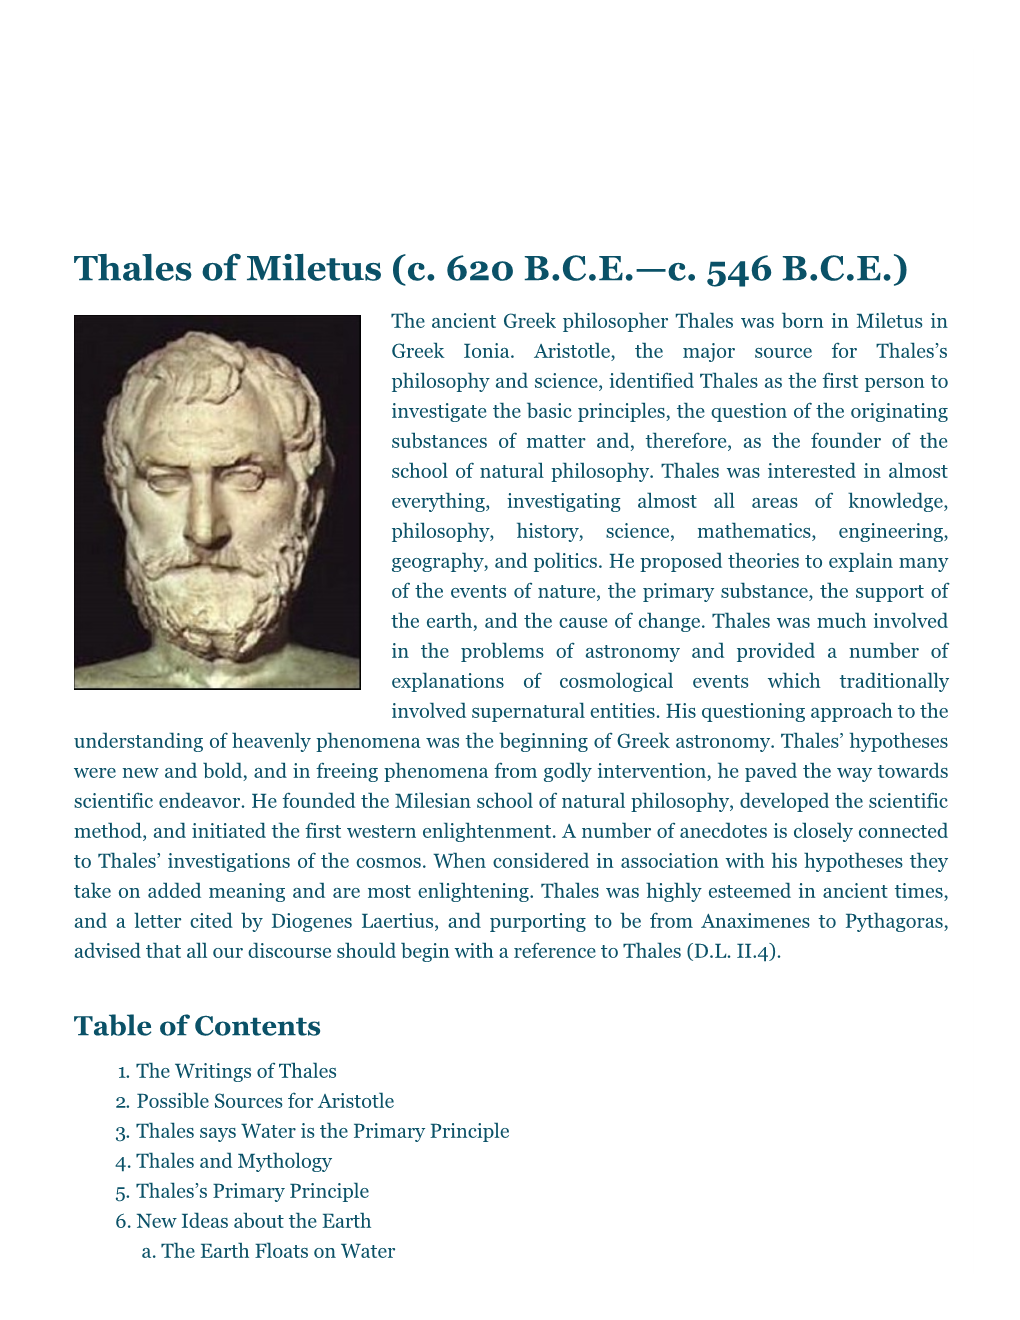 Thales of Miletus (C. 620 B.C.E.—C. 546 B.C.E.)